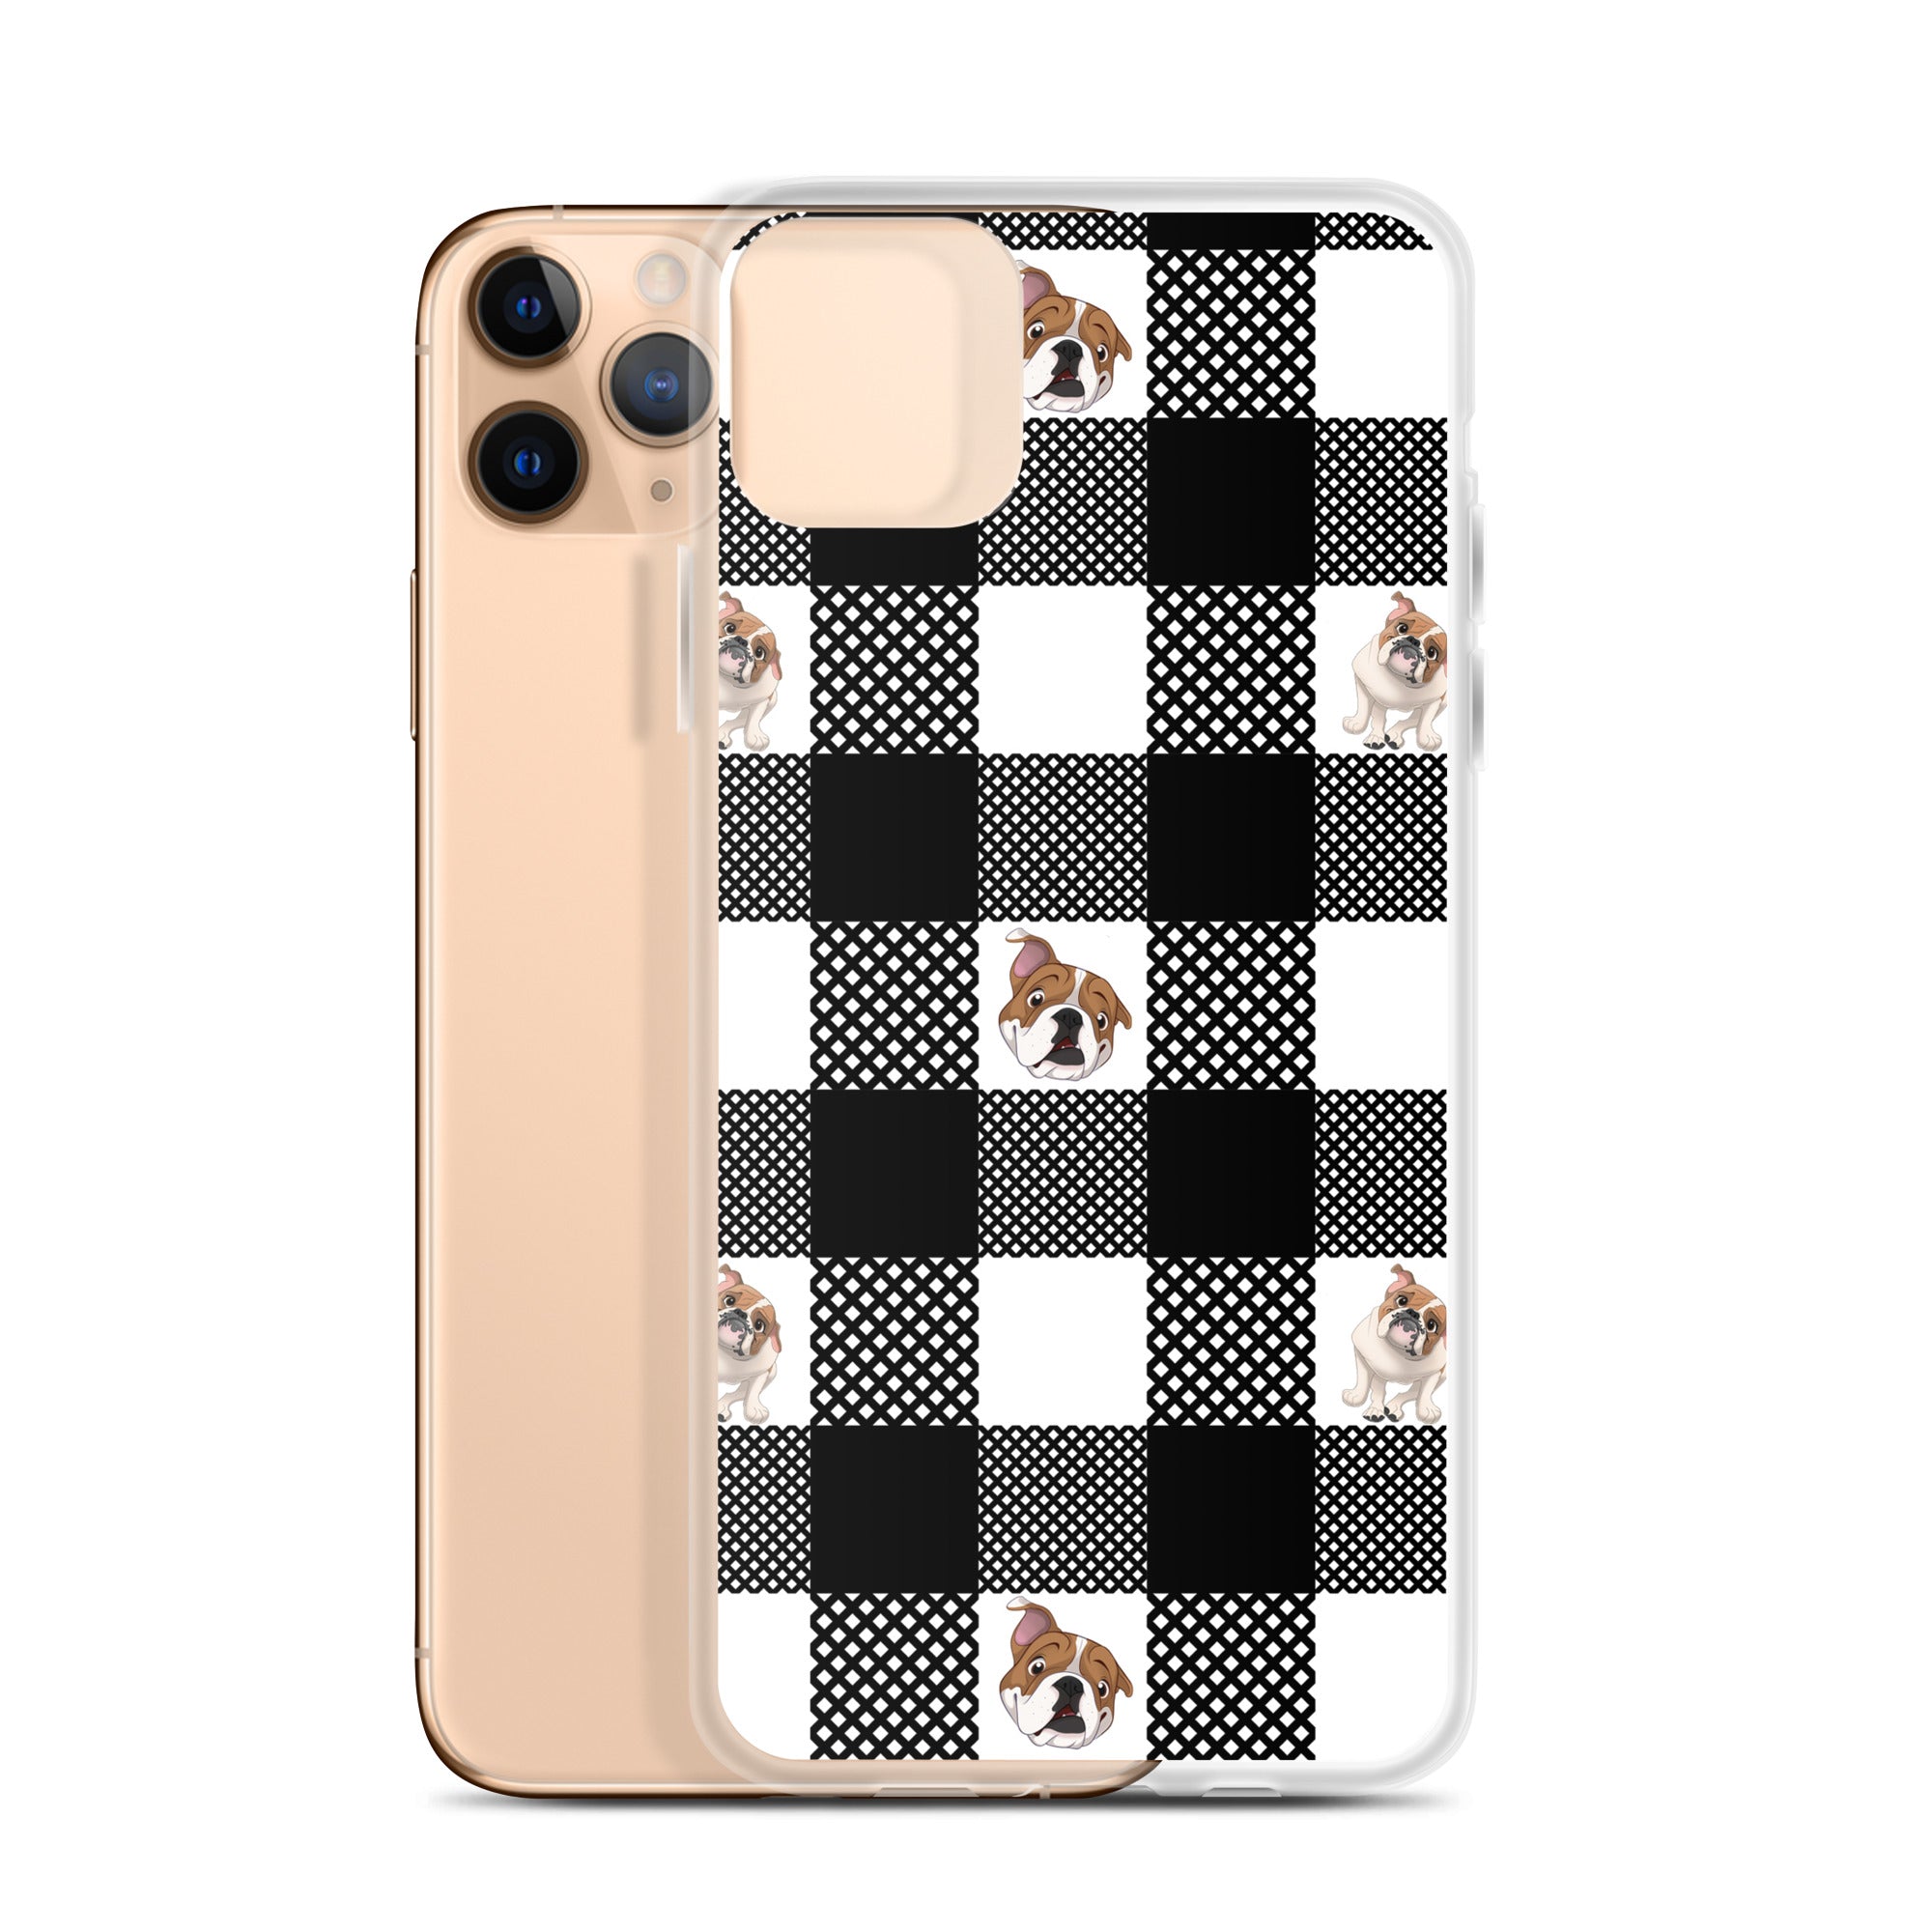 black and grey checkered louis vuitton phone case